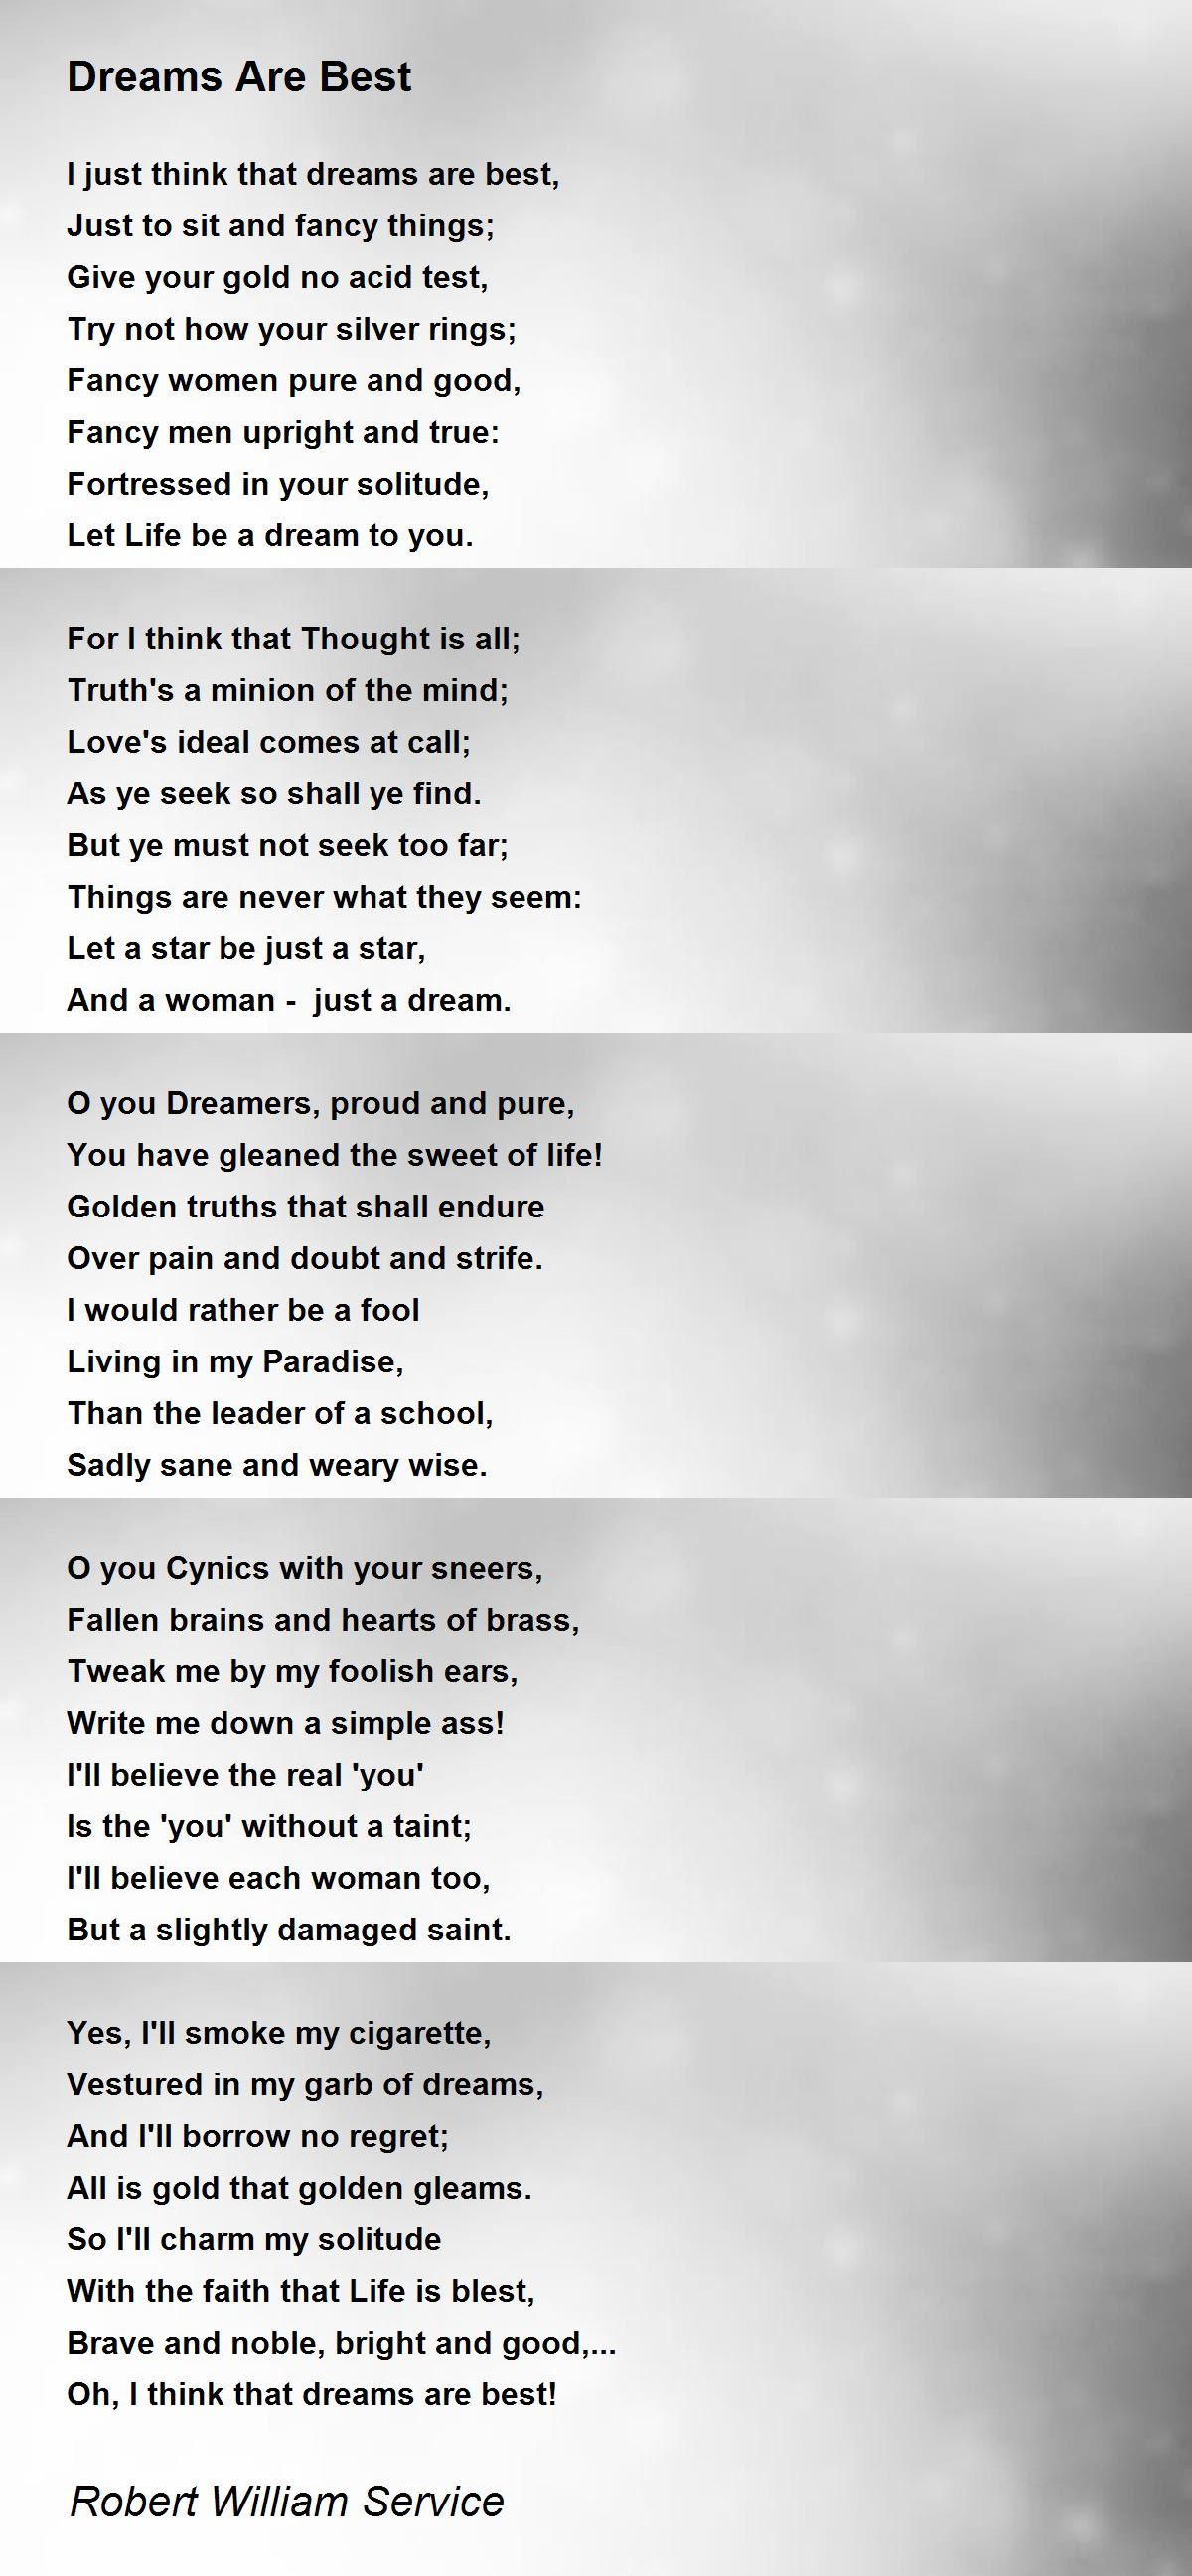 Careers Poem by Robert William Service - Poem Hunter